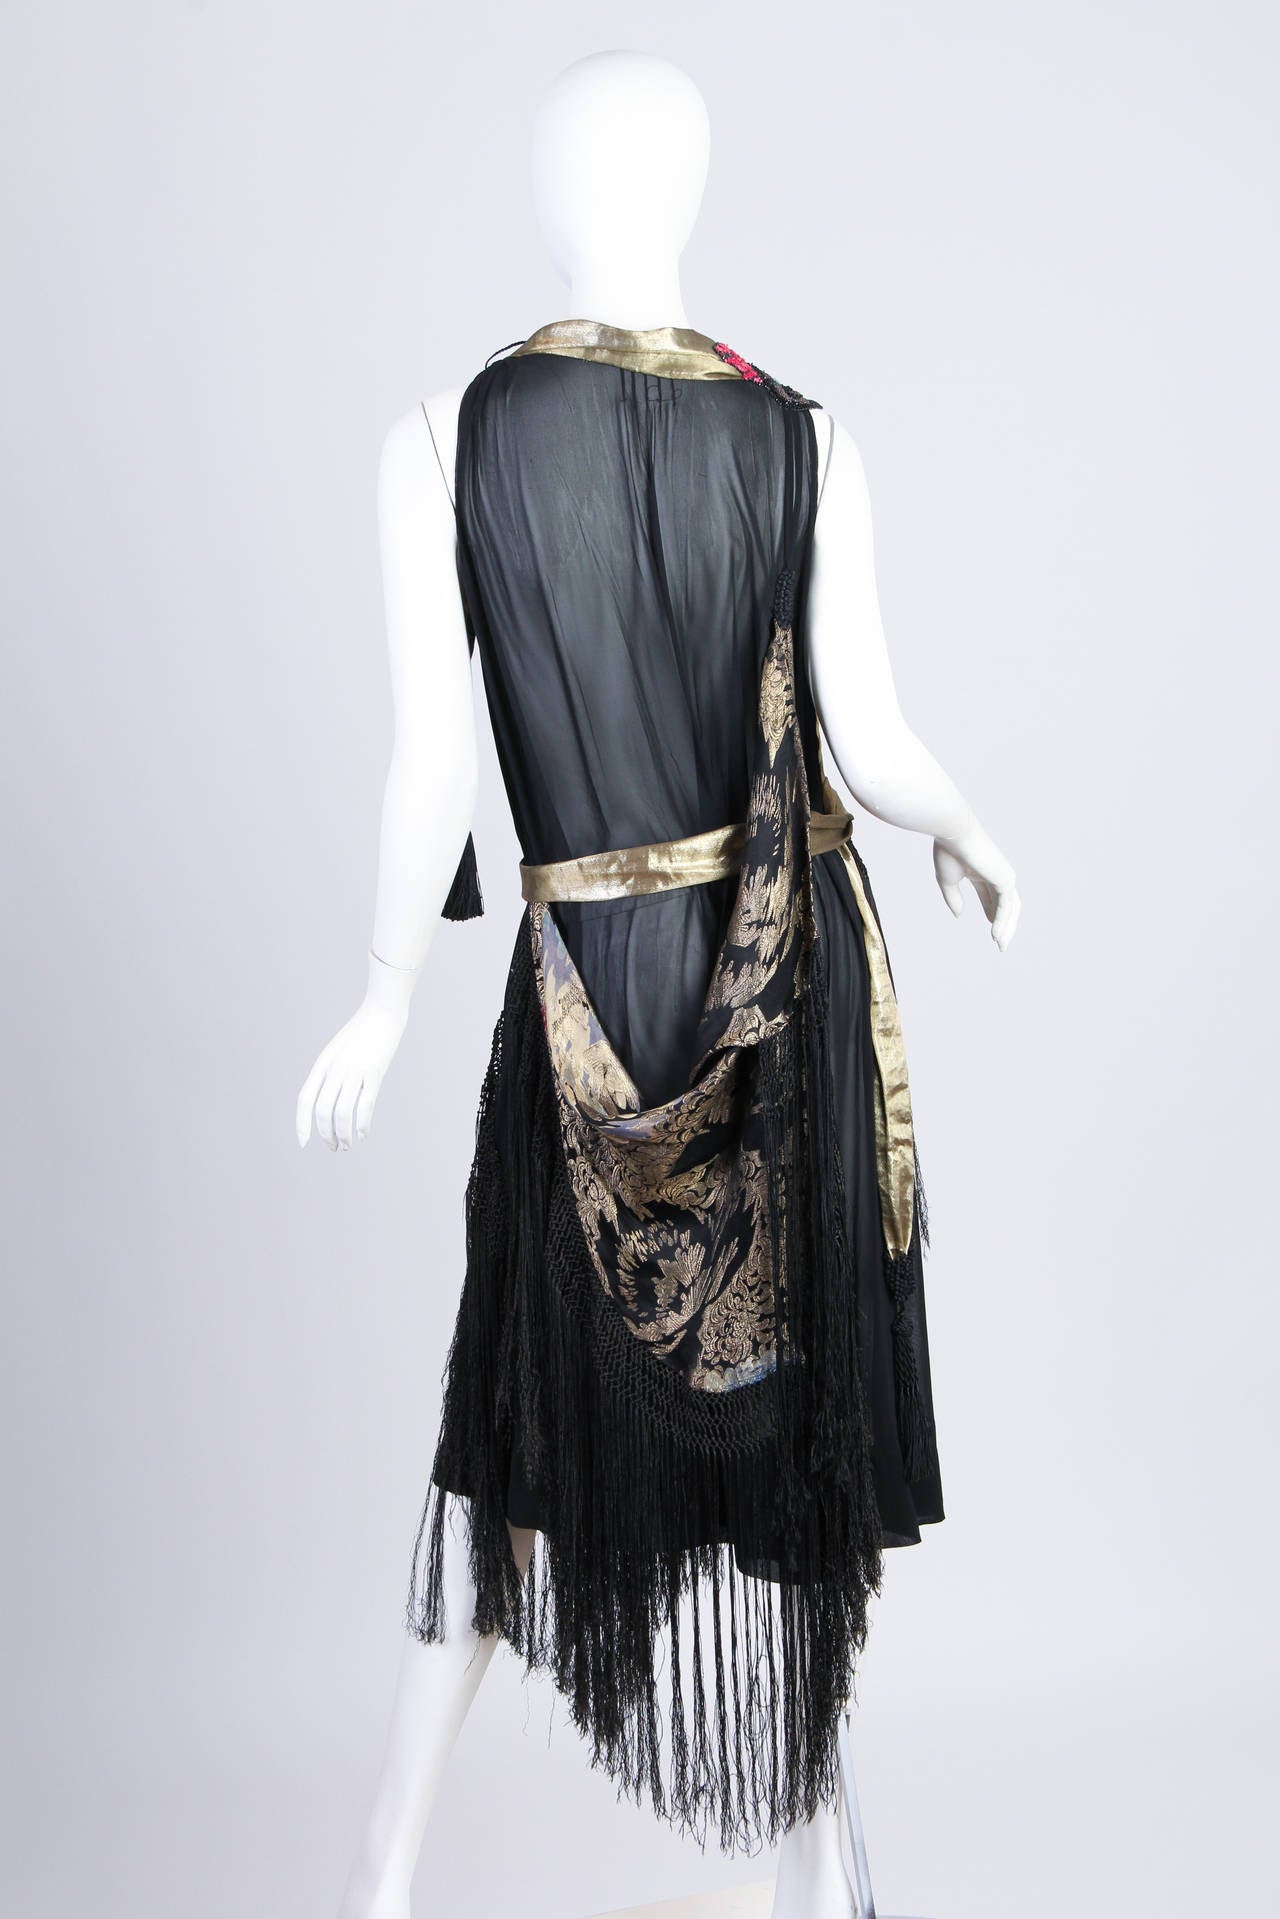 Women's 1920s Asymmetrical Dress with Beads, Lamé and Fringe